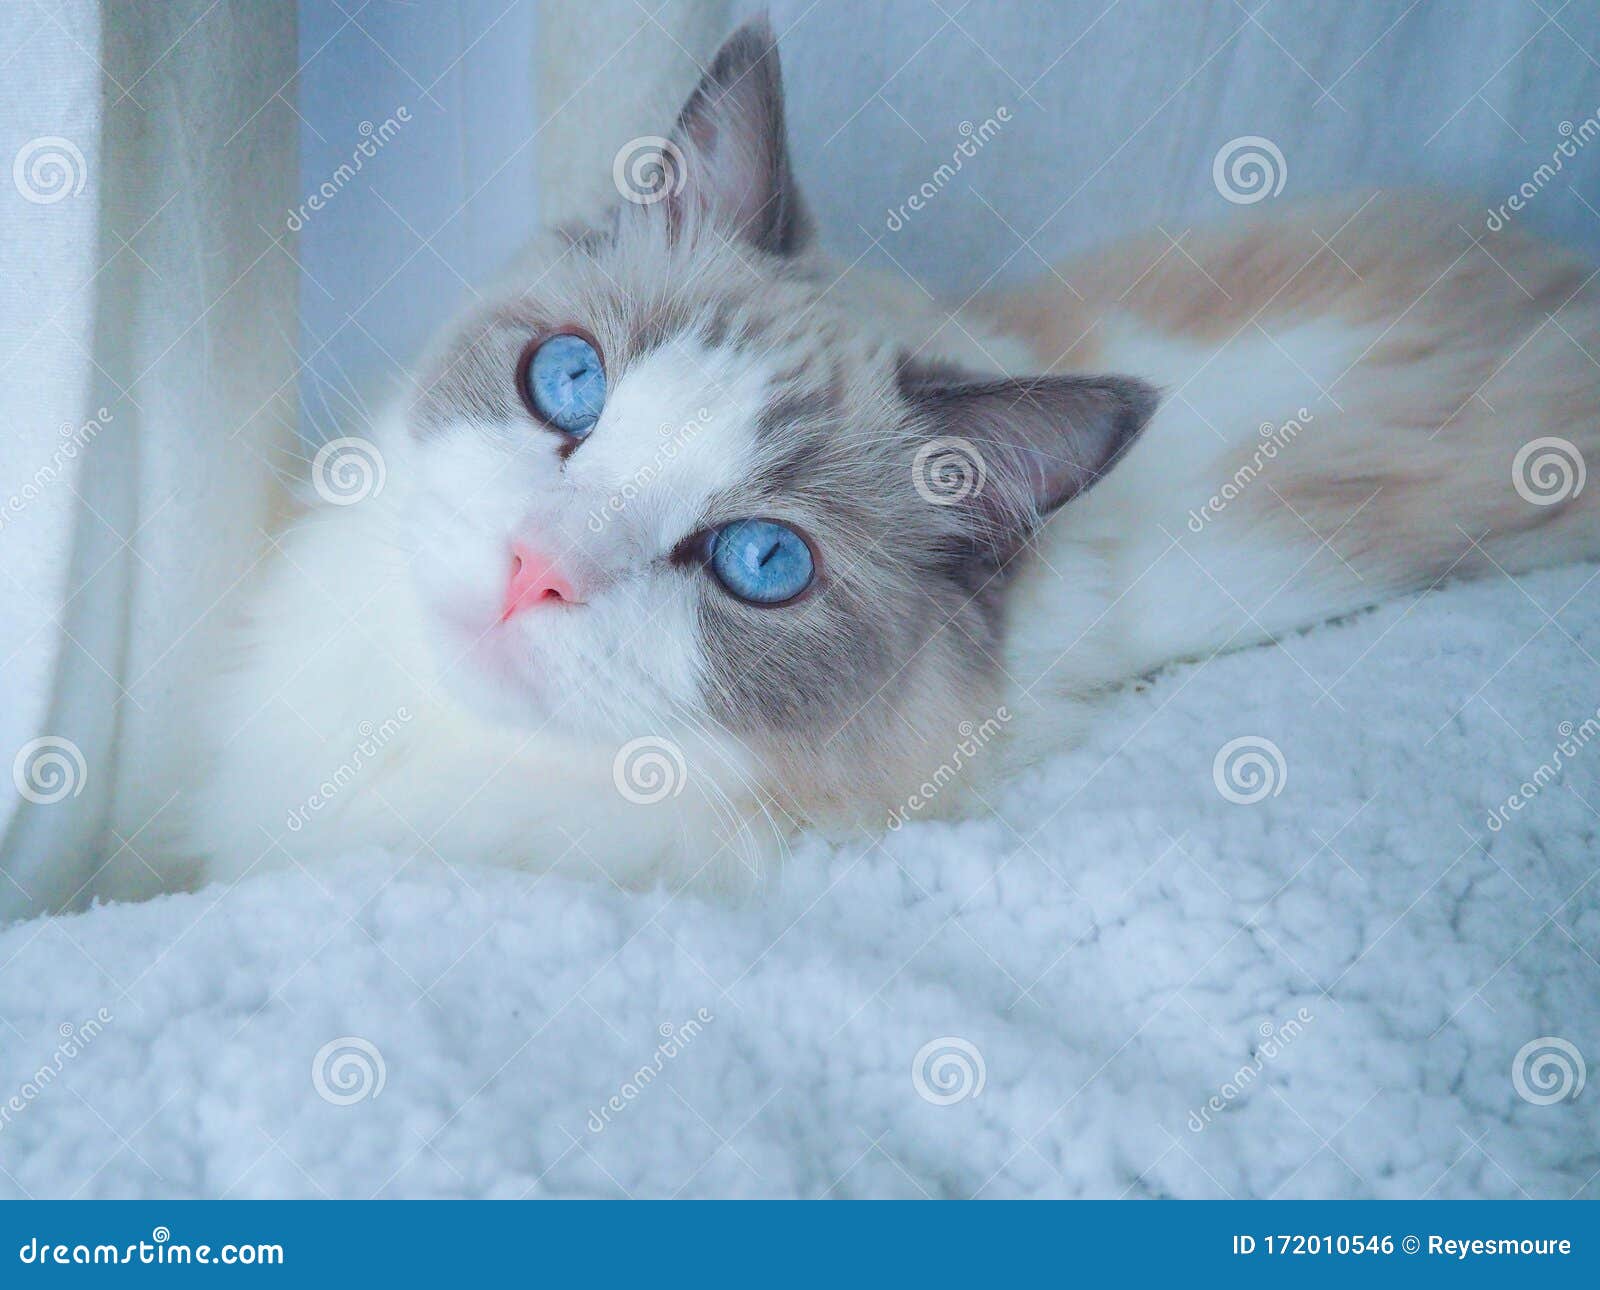 ragdoll cat with beautiful blue eyes.